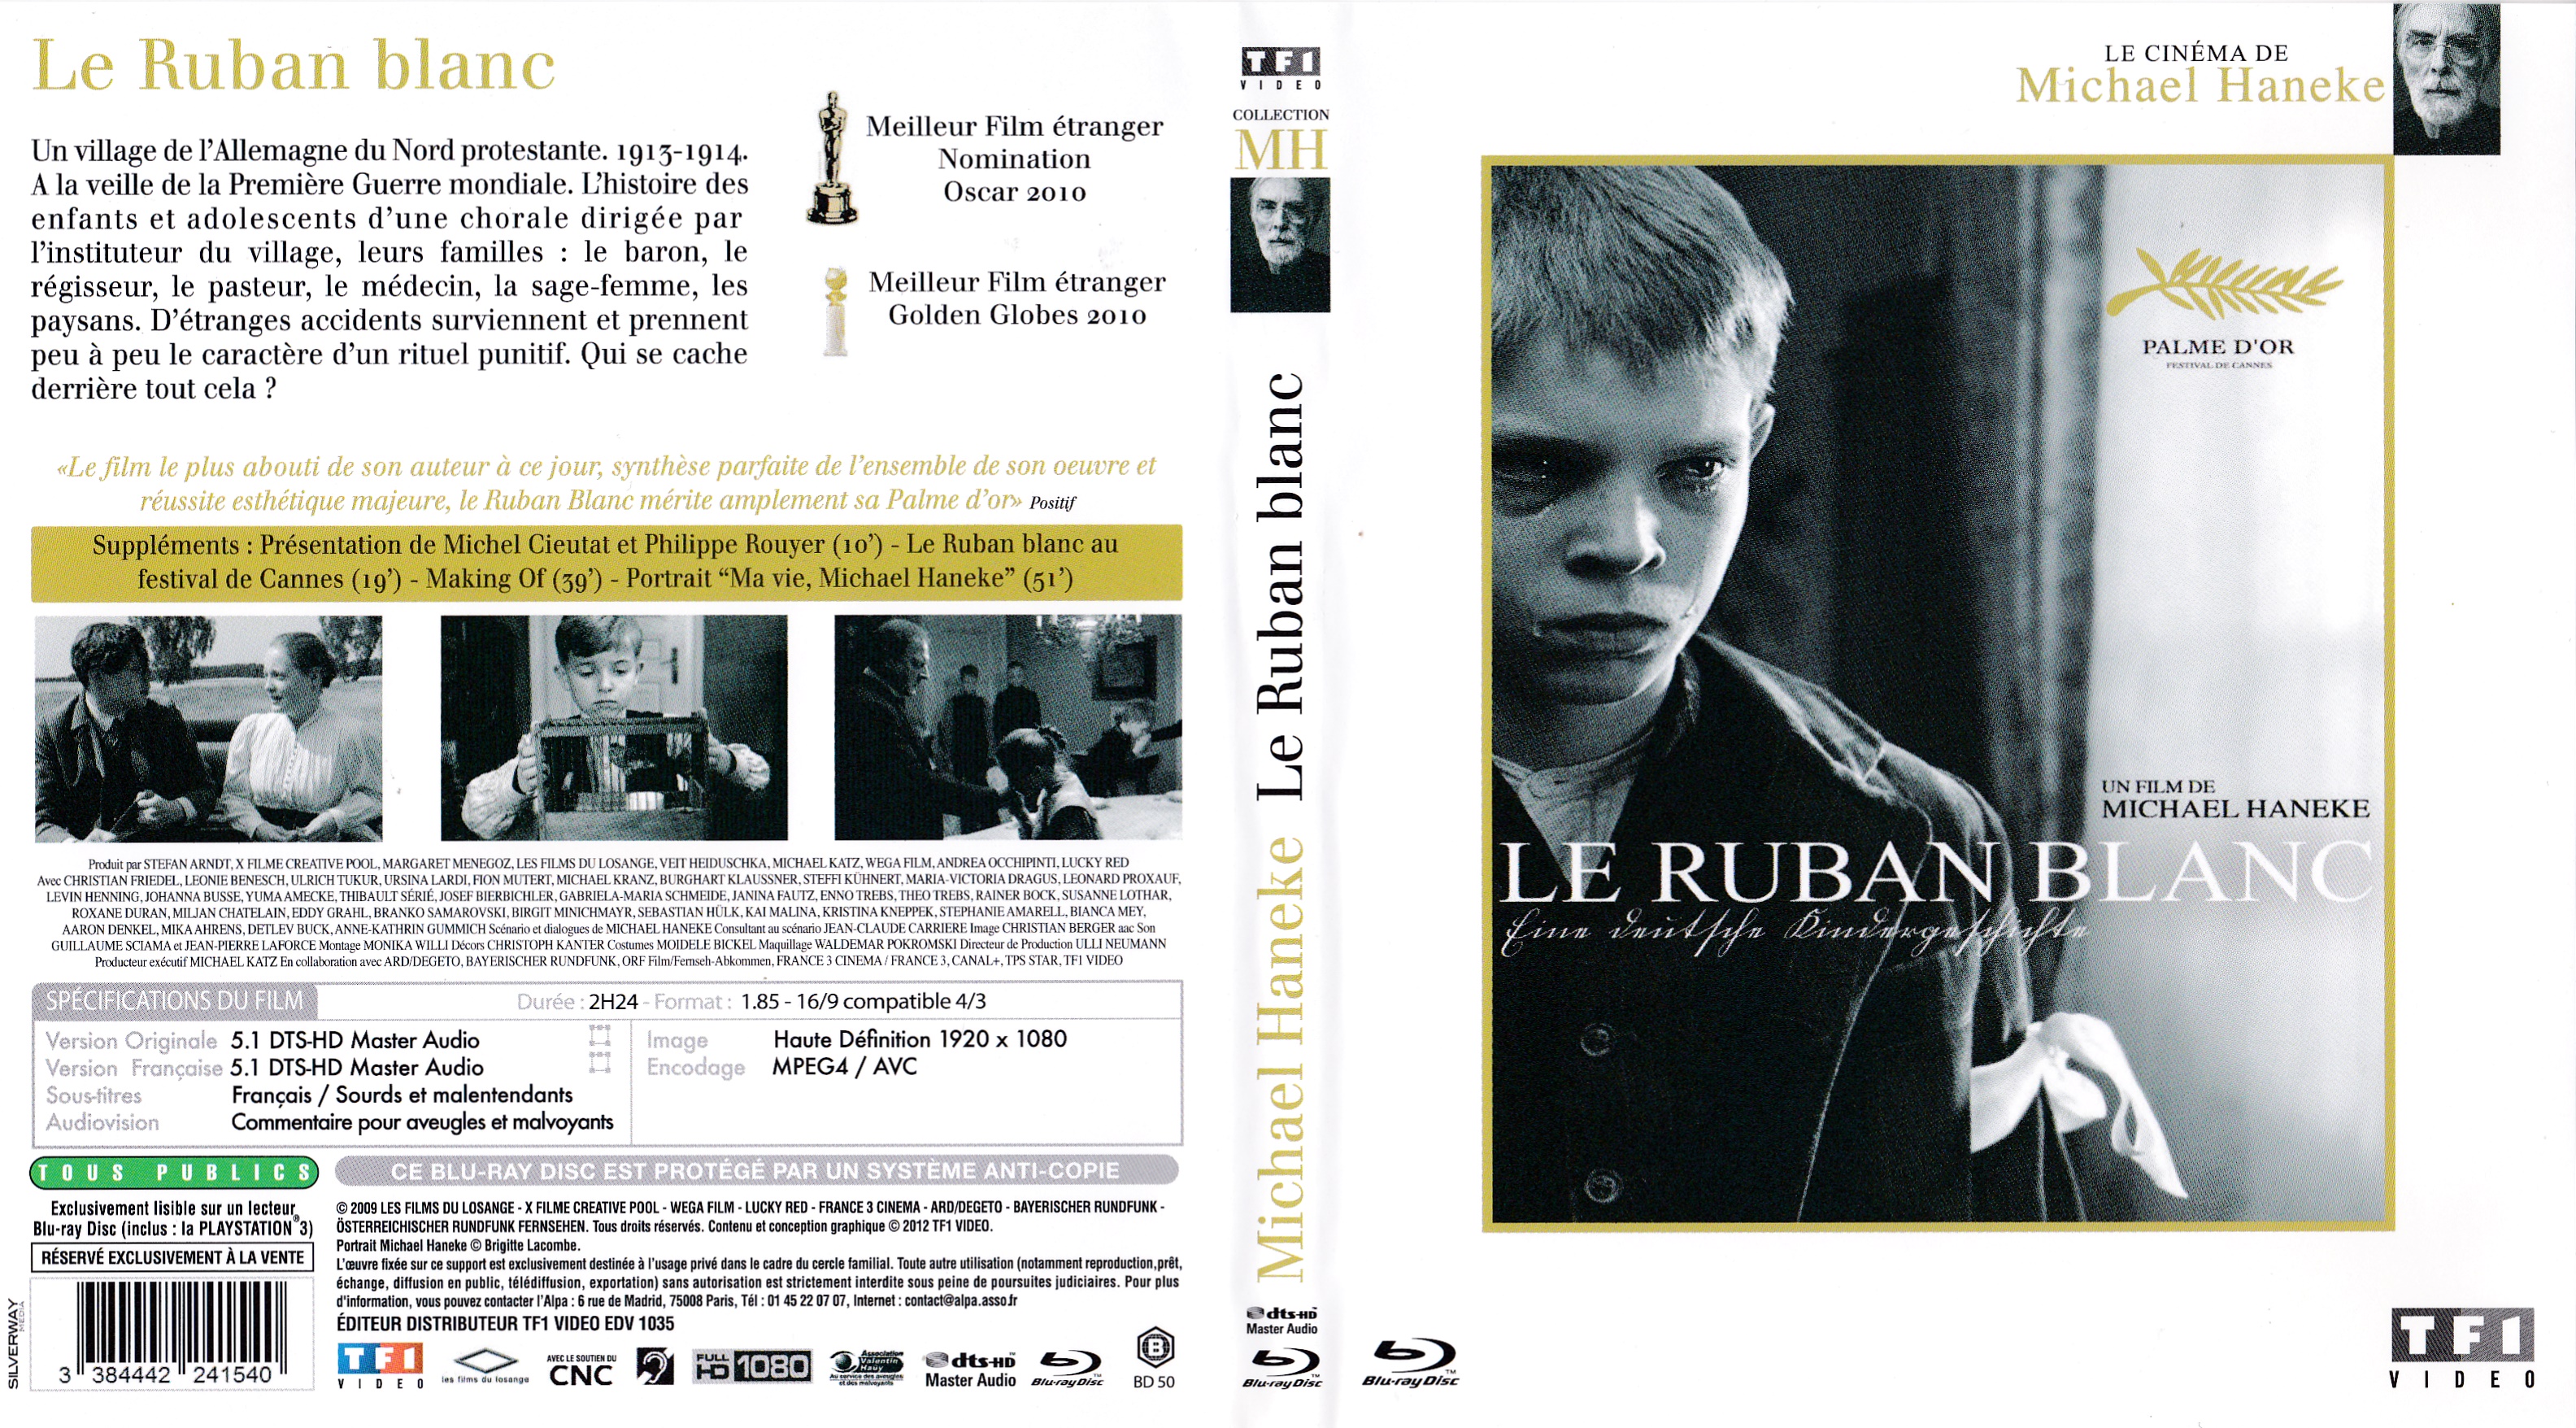 Jaquette DVD Le ruban blanc (BLU-RAY) v2